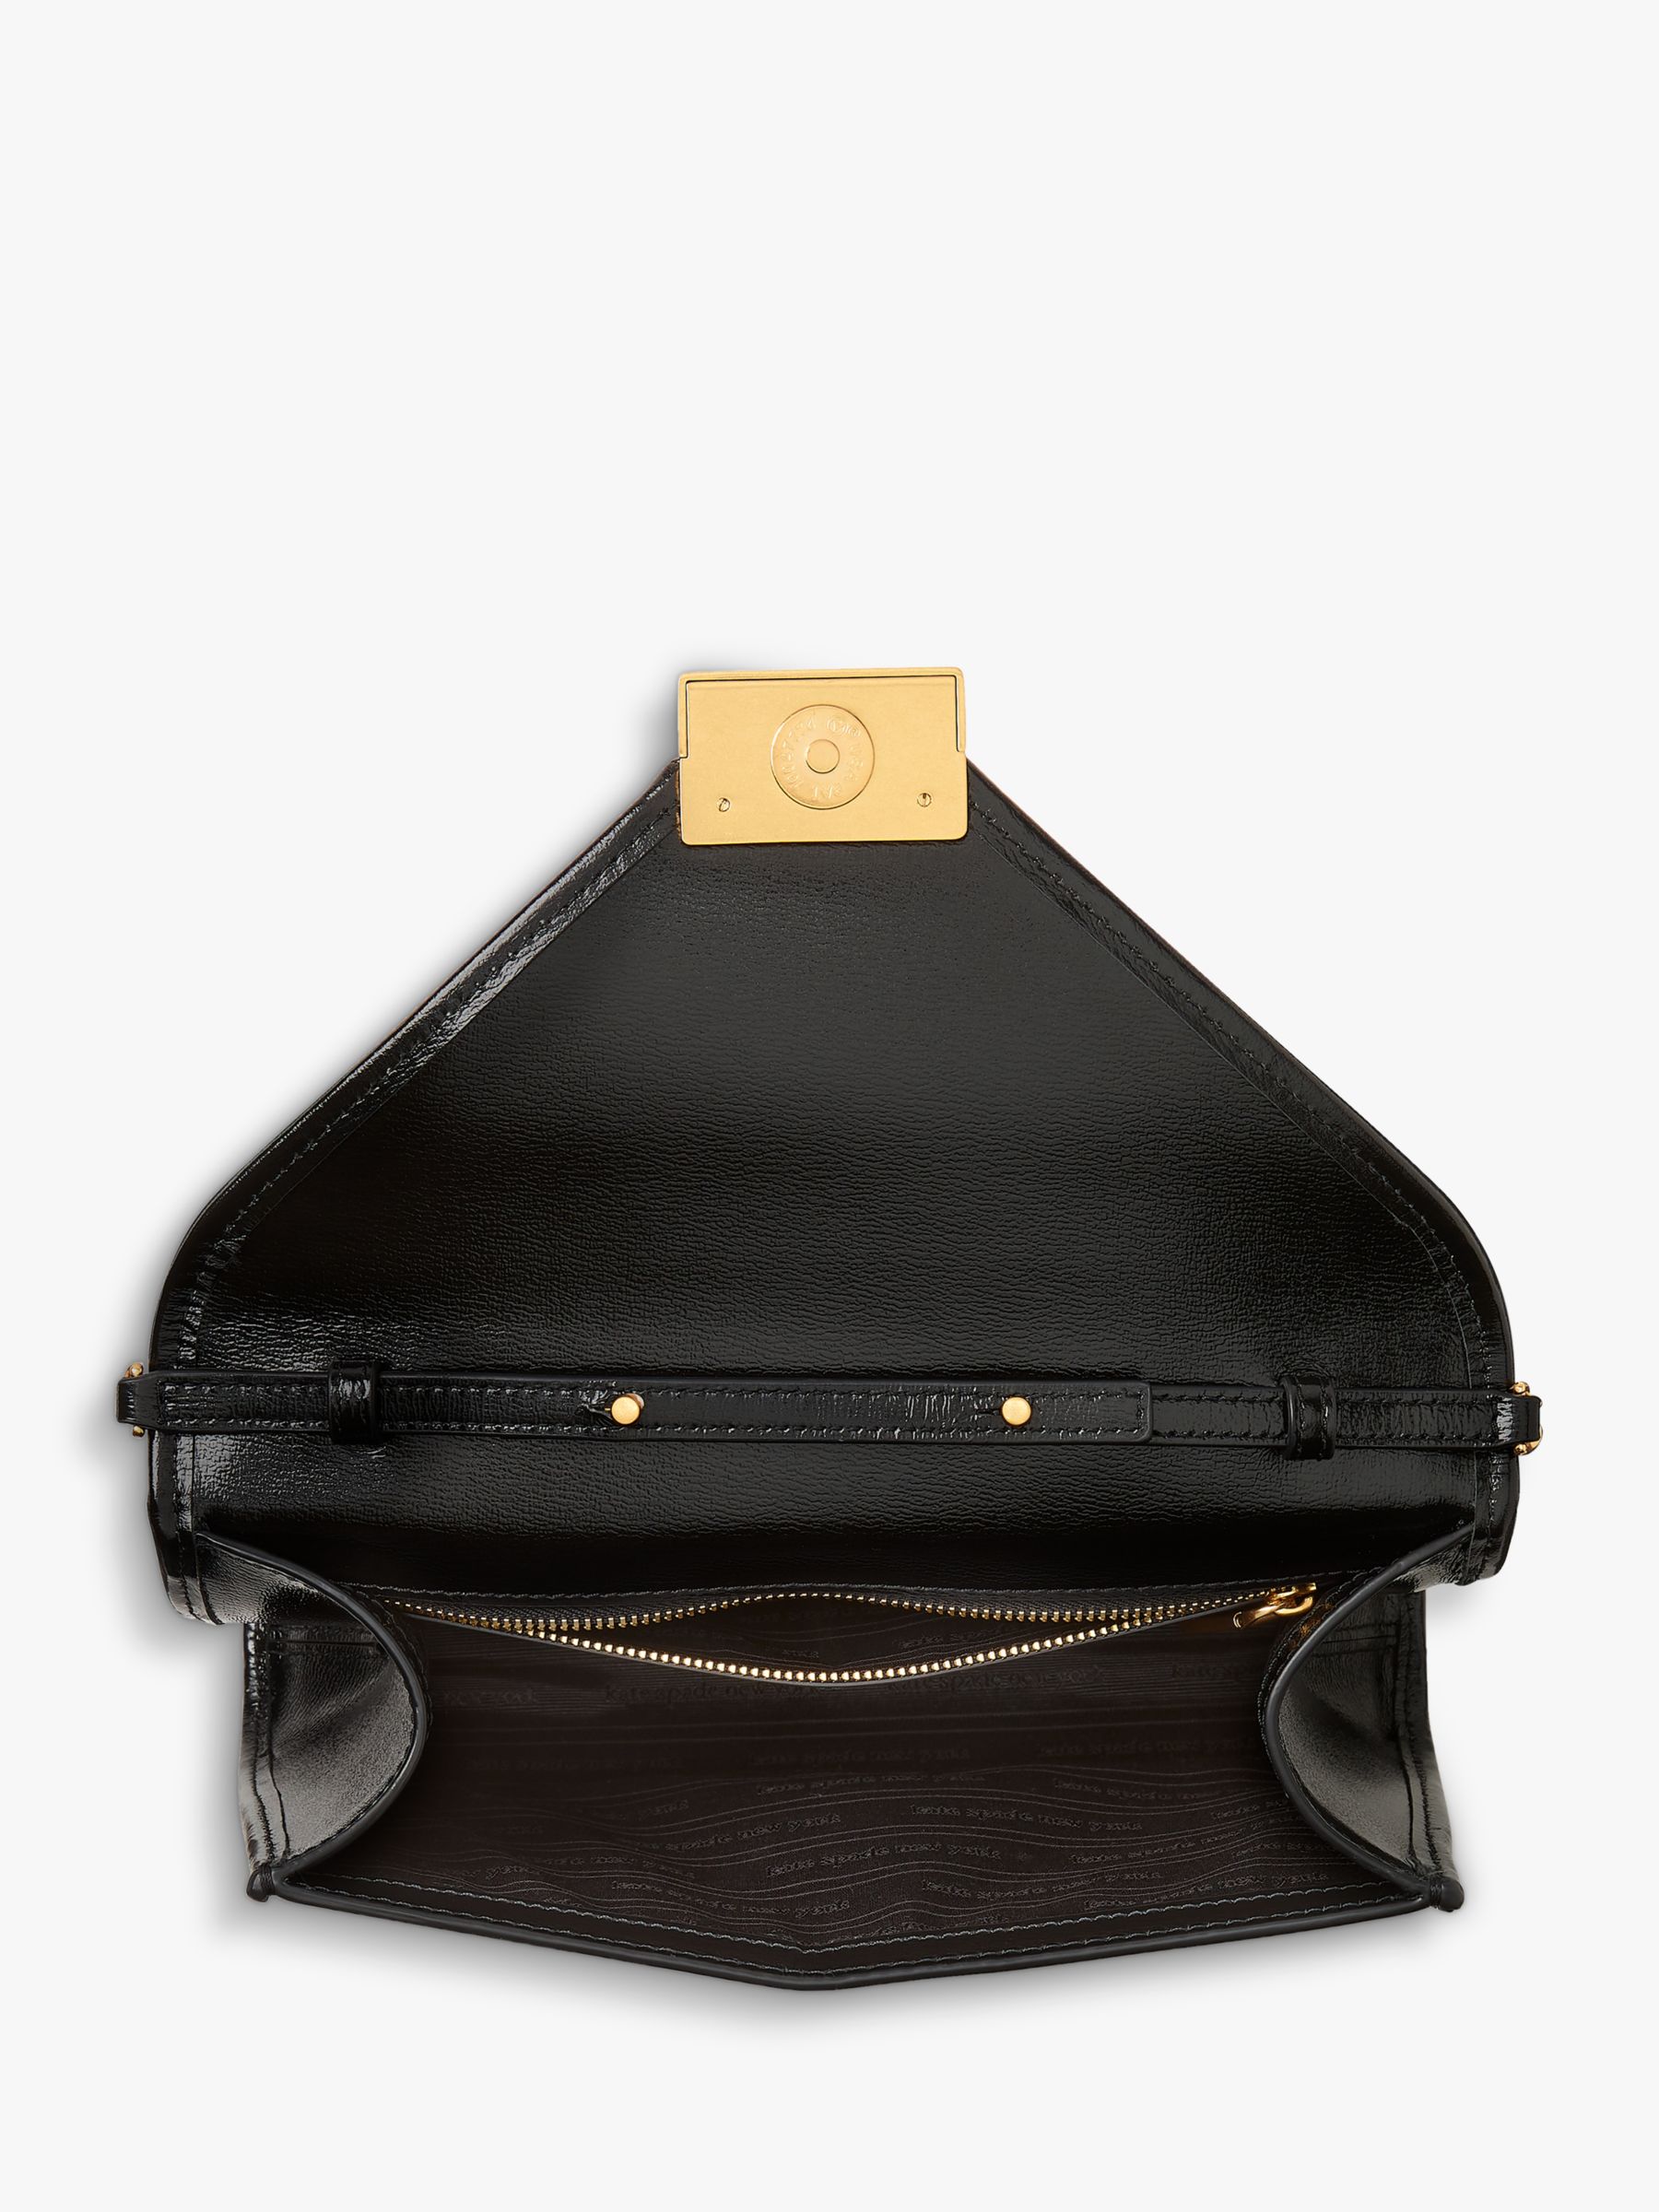 kate spade new york Anna Shiny Textiured Leather Envelope Clutch Bag, Black  at John Lewis & Partners